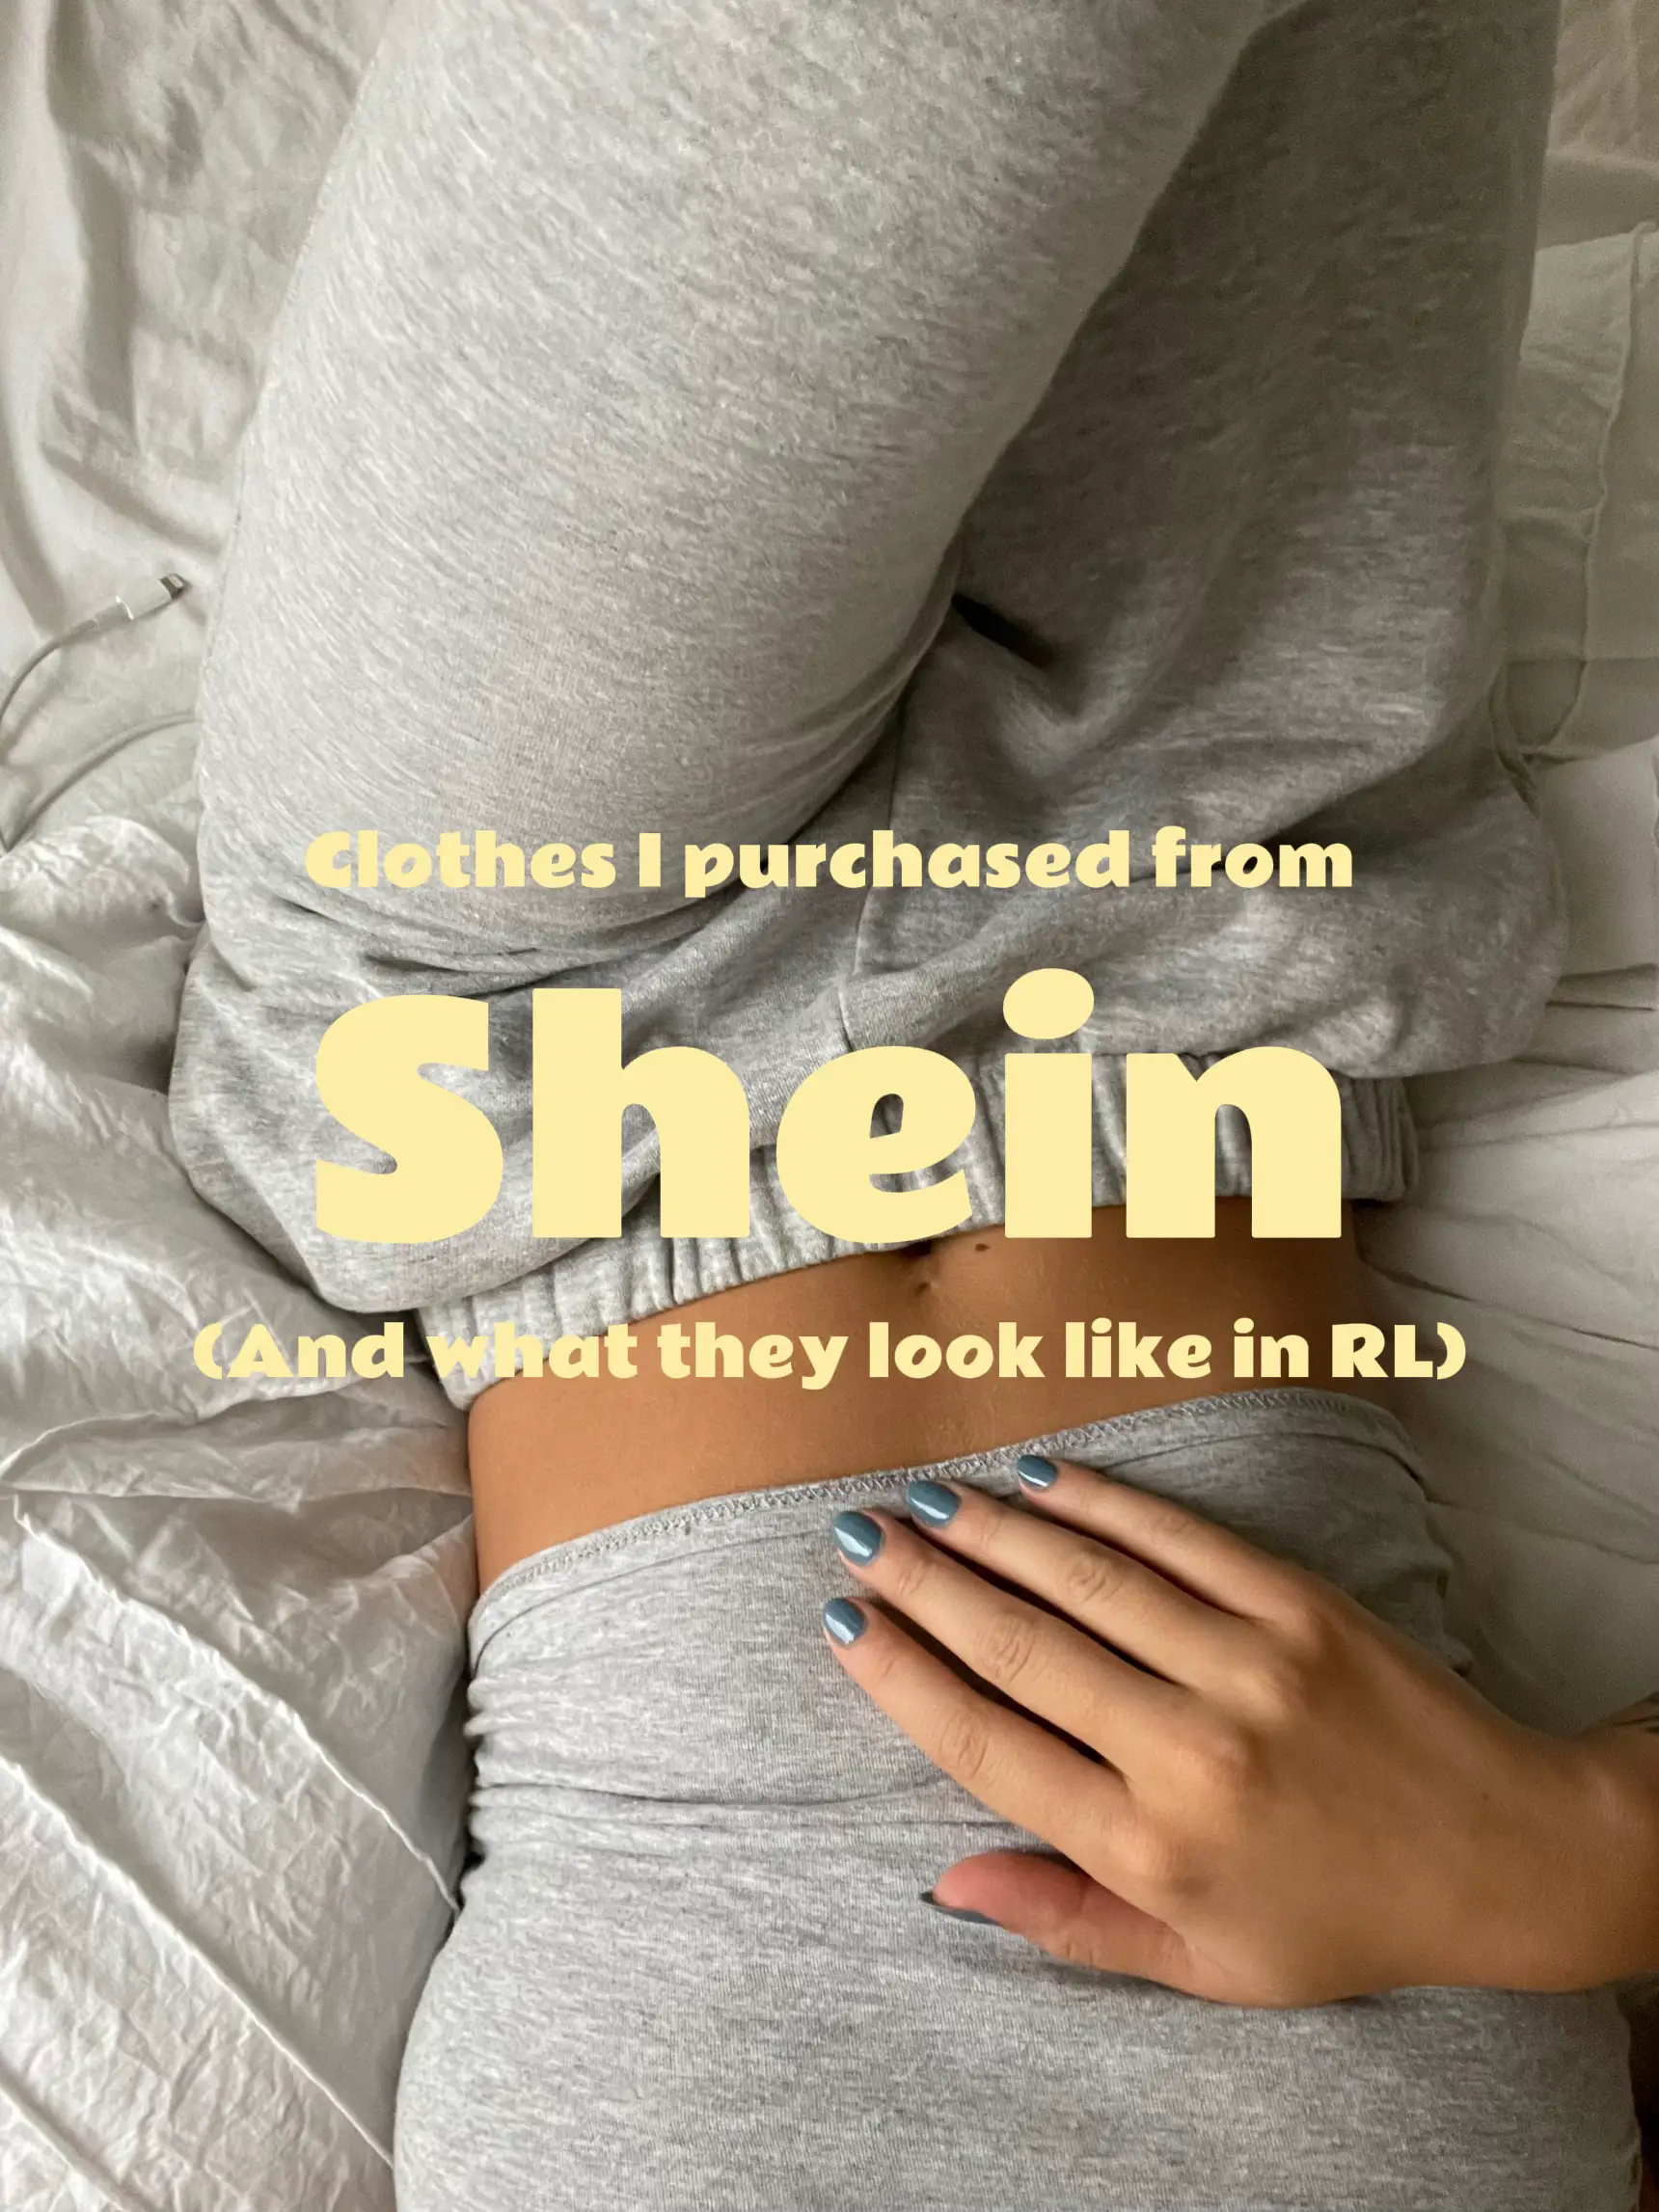 SHEIN Tween Girls' 3pcs Sportswear Set With Contrast Color Design